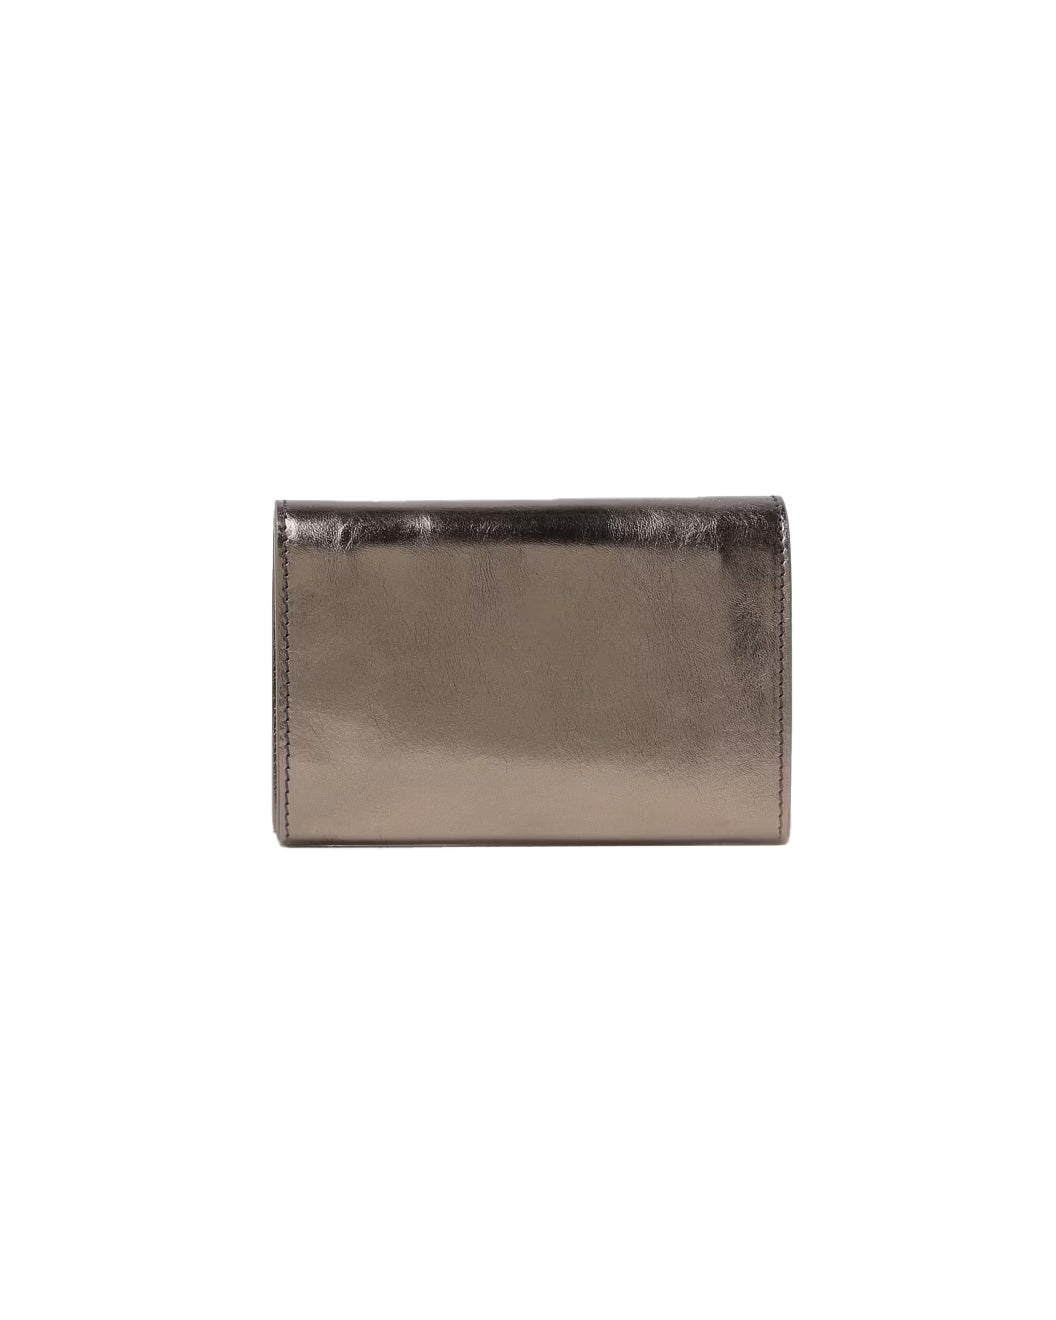 Medium Wallet Esperia (Bronze/Brass)